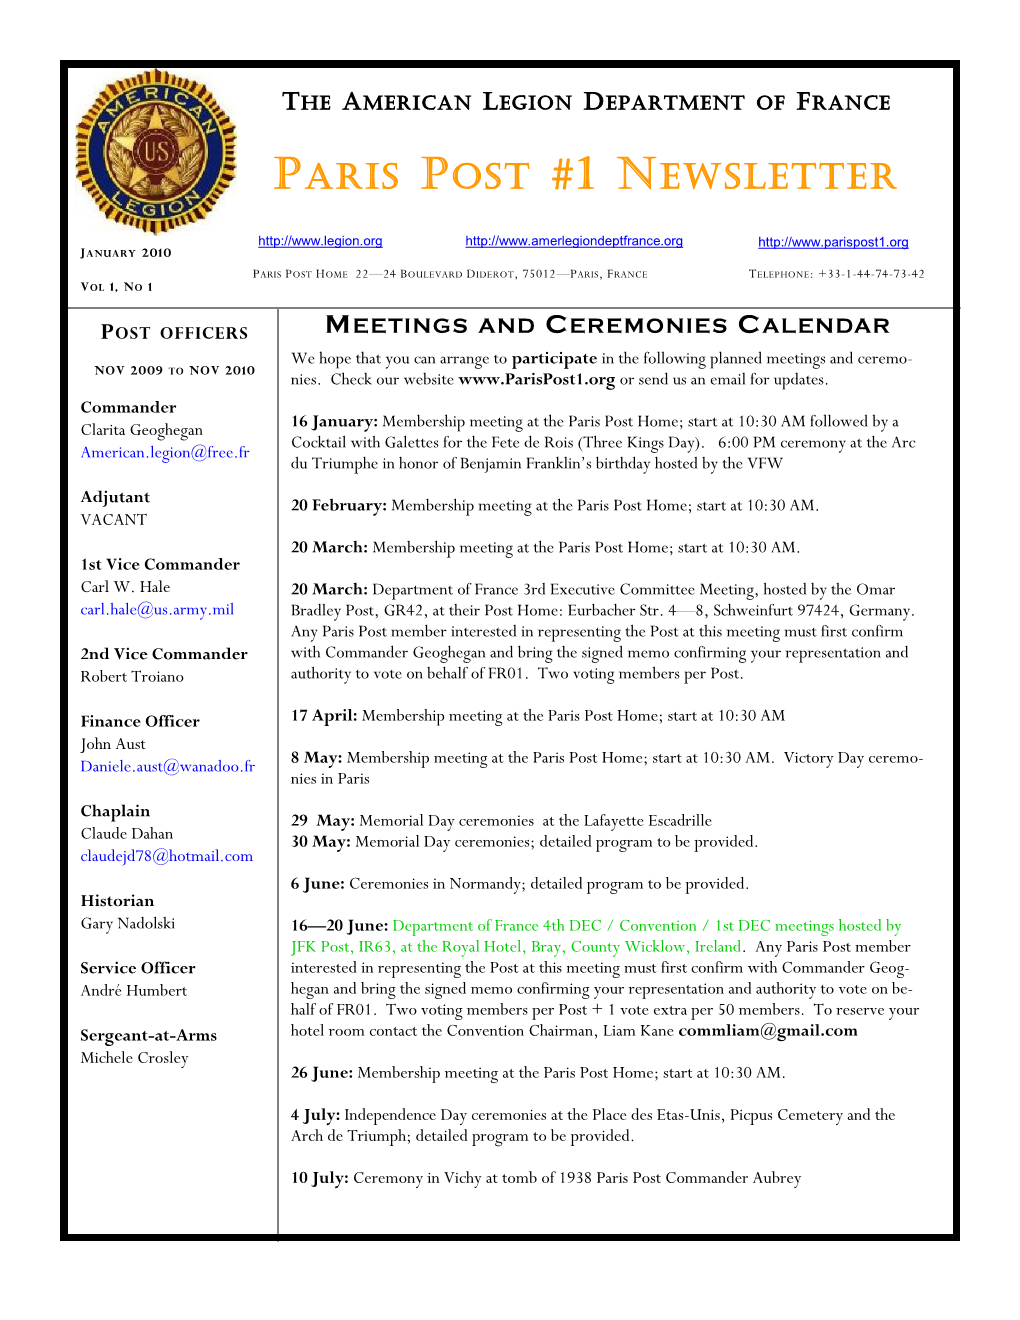 Paris Post #1 Newsletter